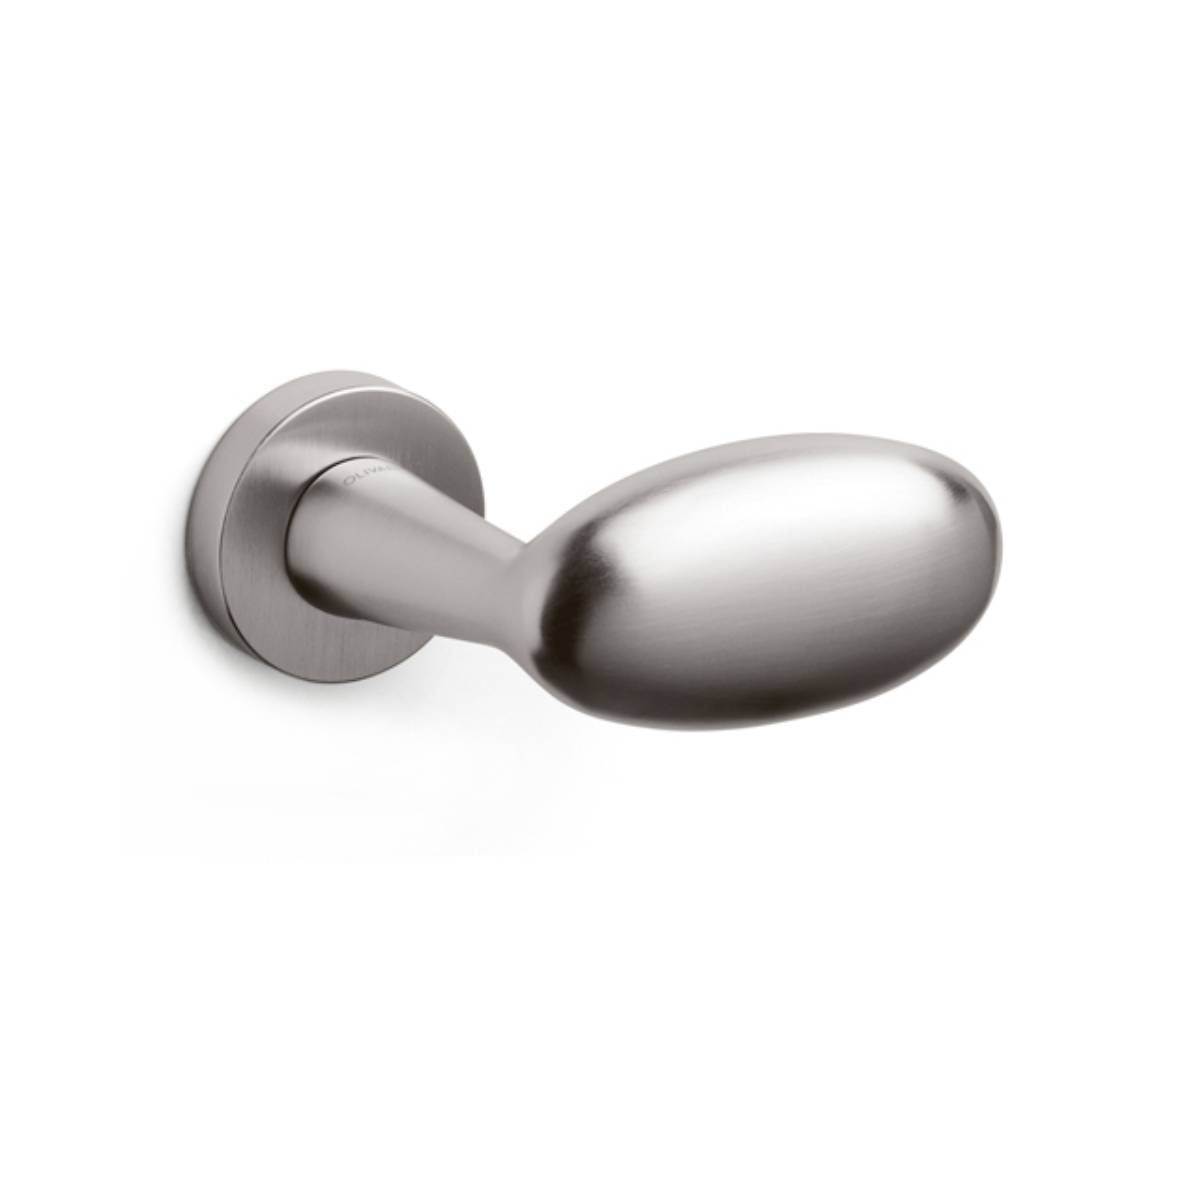 Pair of Blindo Mat stainless steel door handles